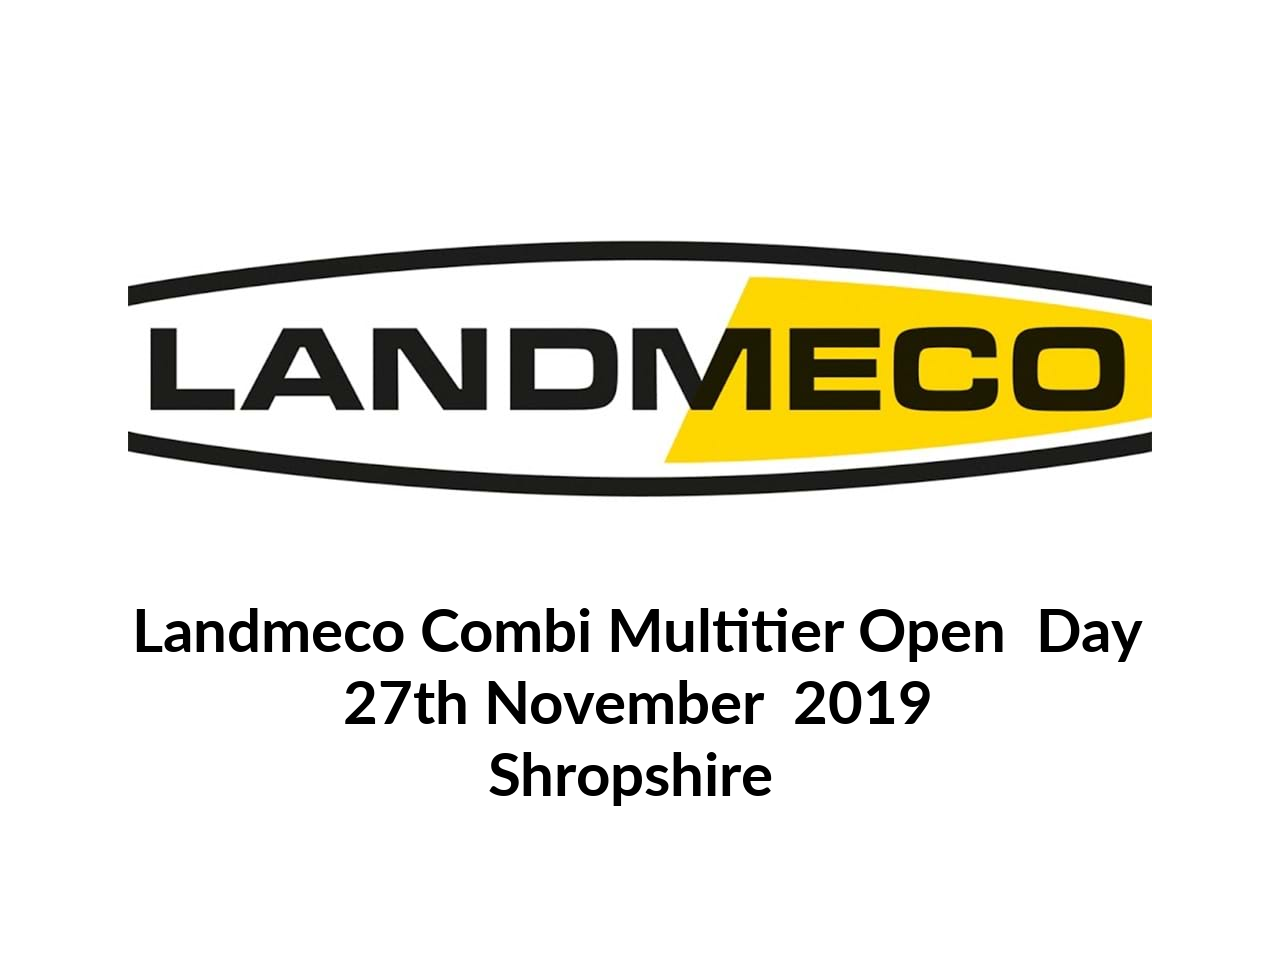 Landmeco Open Day in Shropshire